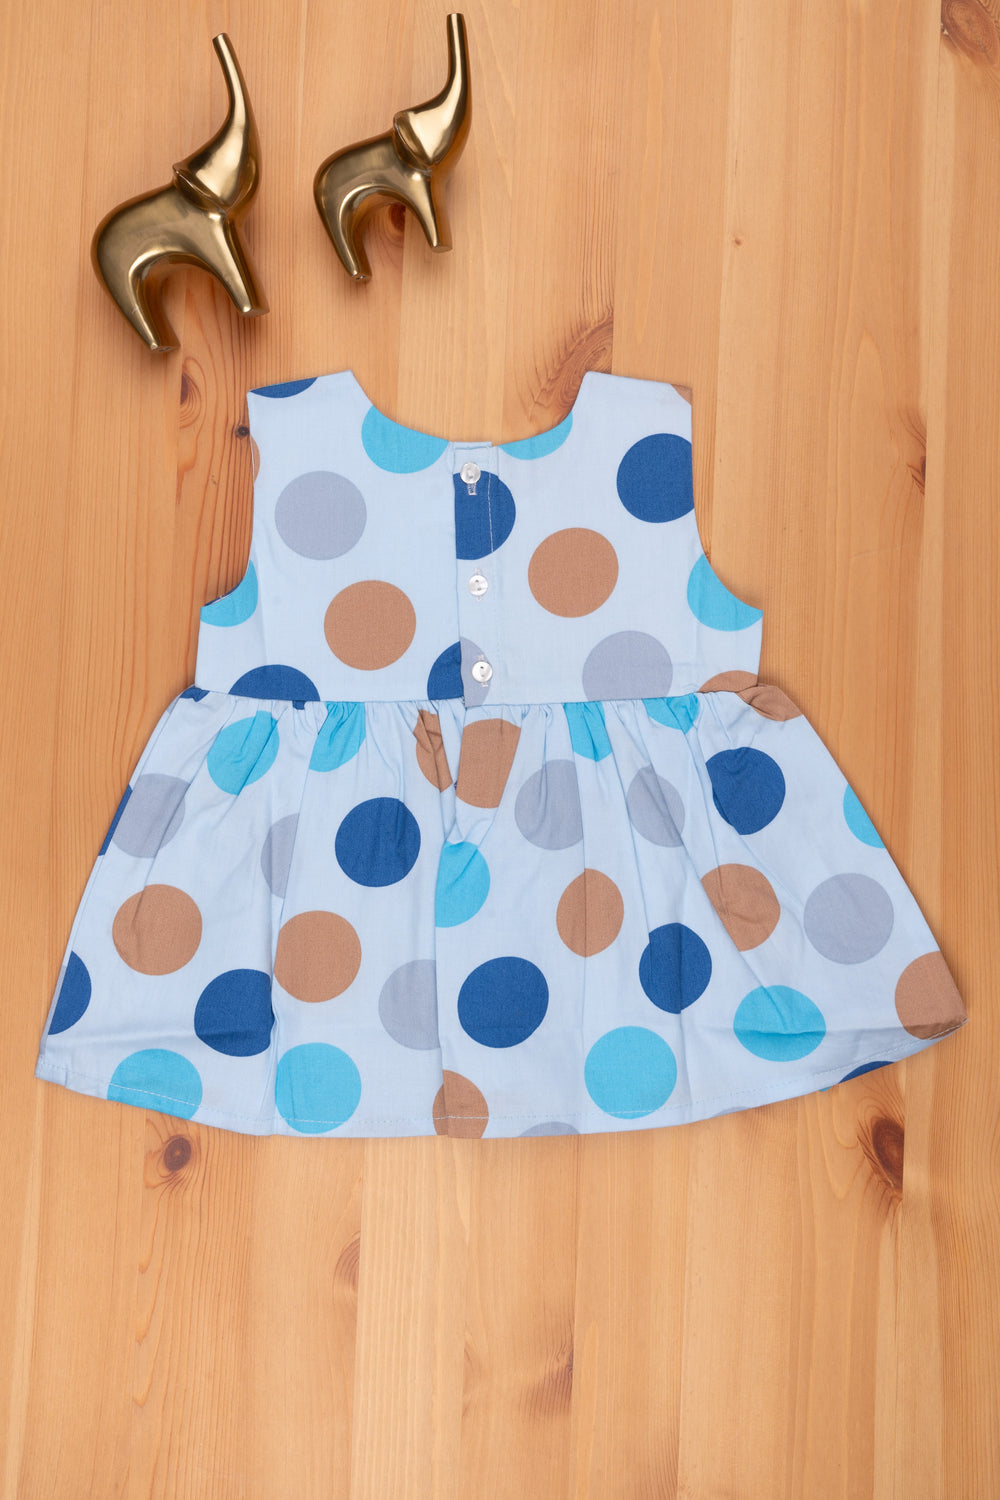 The Nesavu Baby Frock / Jhabla White Polka Dot Baby Dress - Classic Elegance for Infants Nesavu Fancy Dresses For baby Girls | Buy Baby Frocks online | The Nesavu